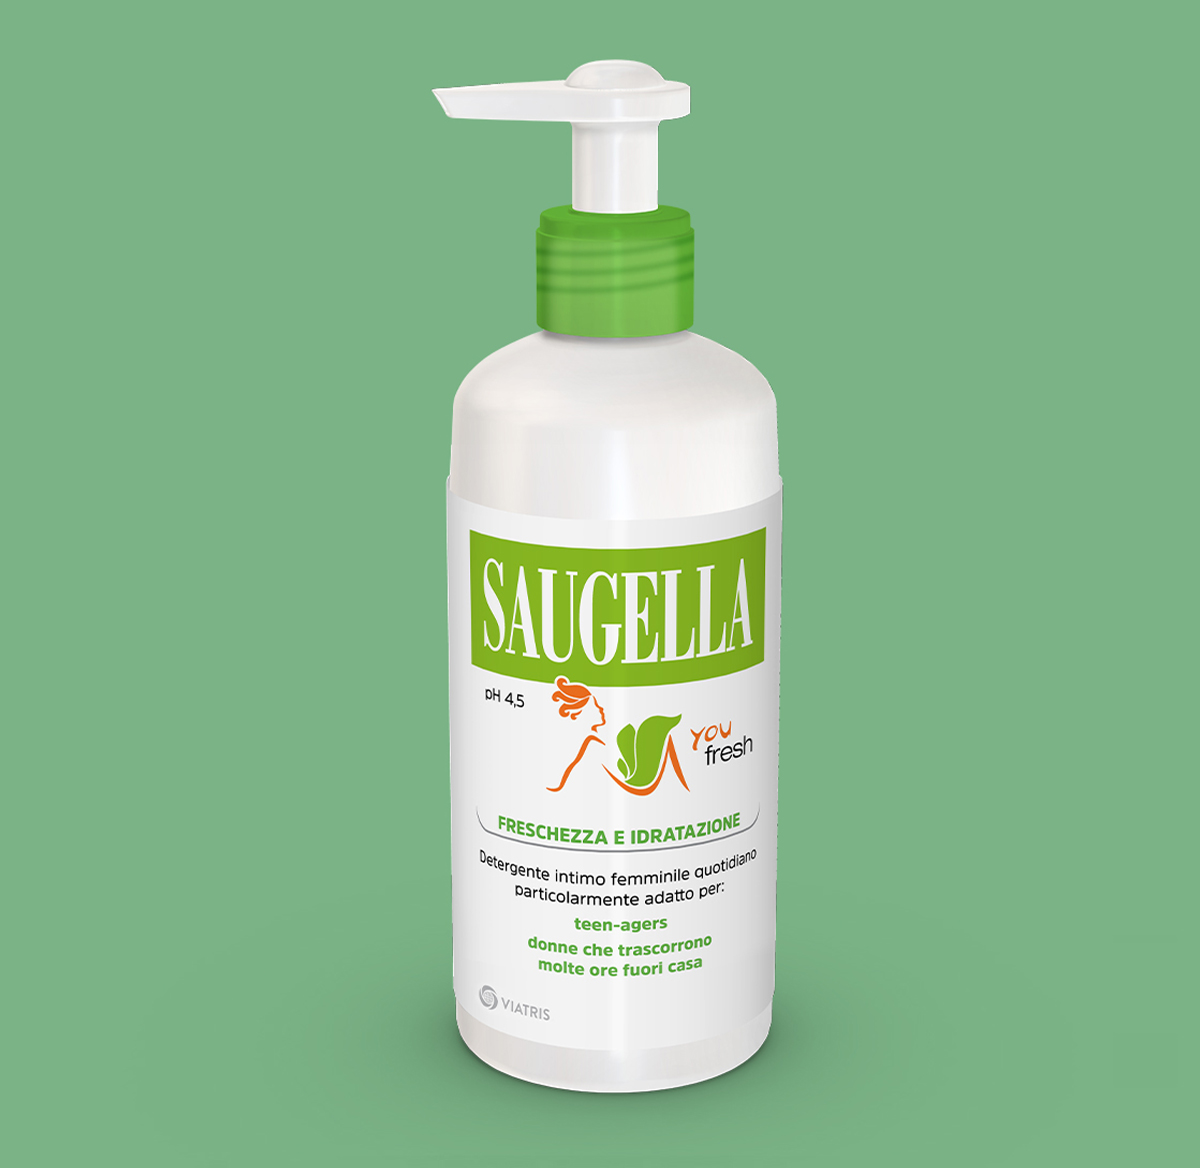 Saugella You Fresh - Detergente intimo antibatterico